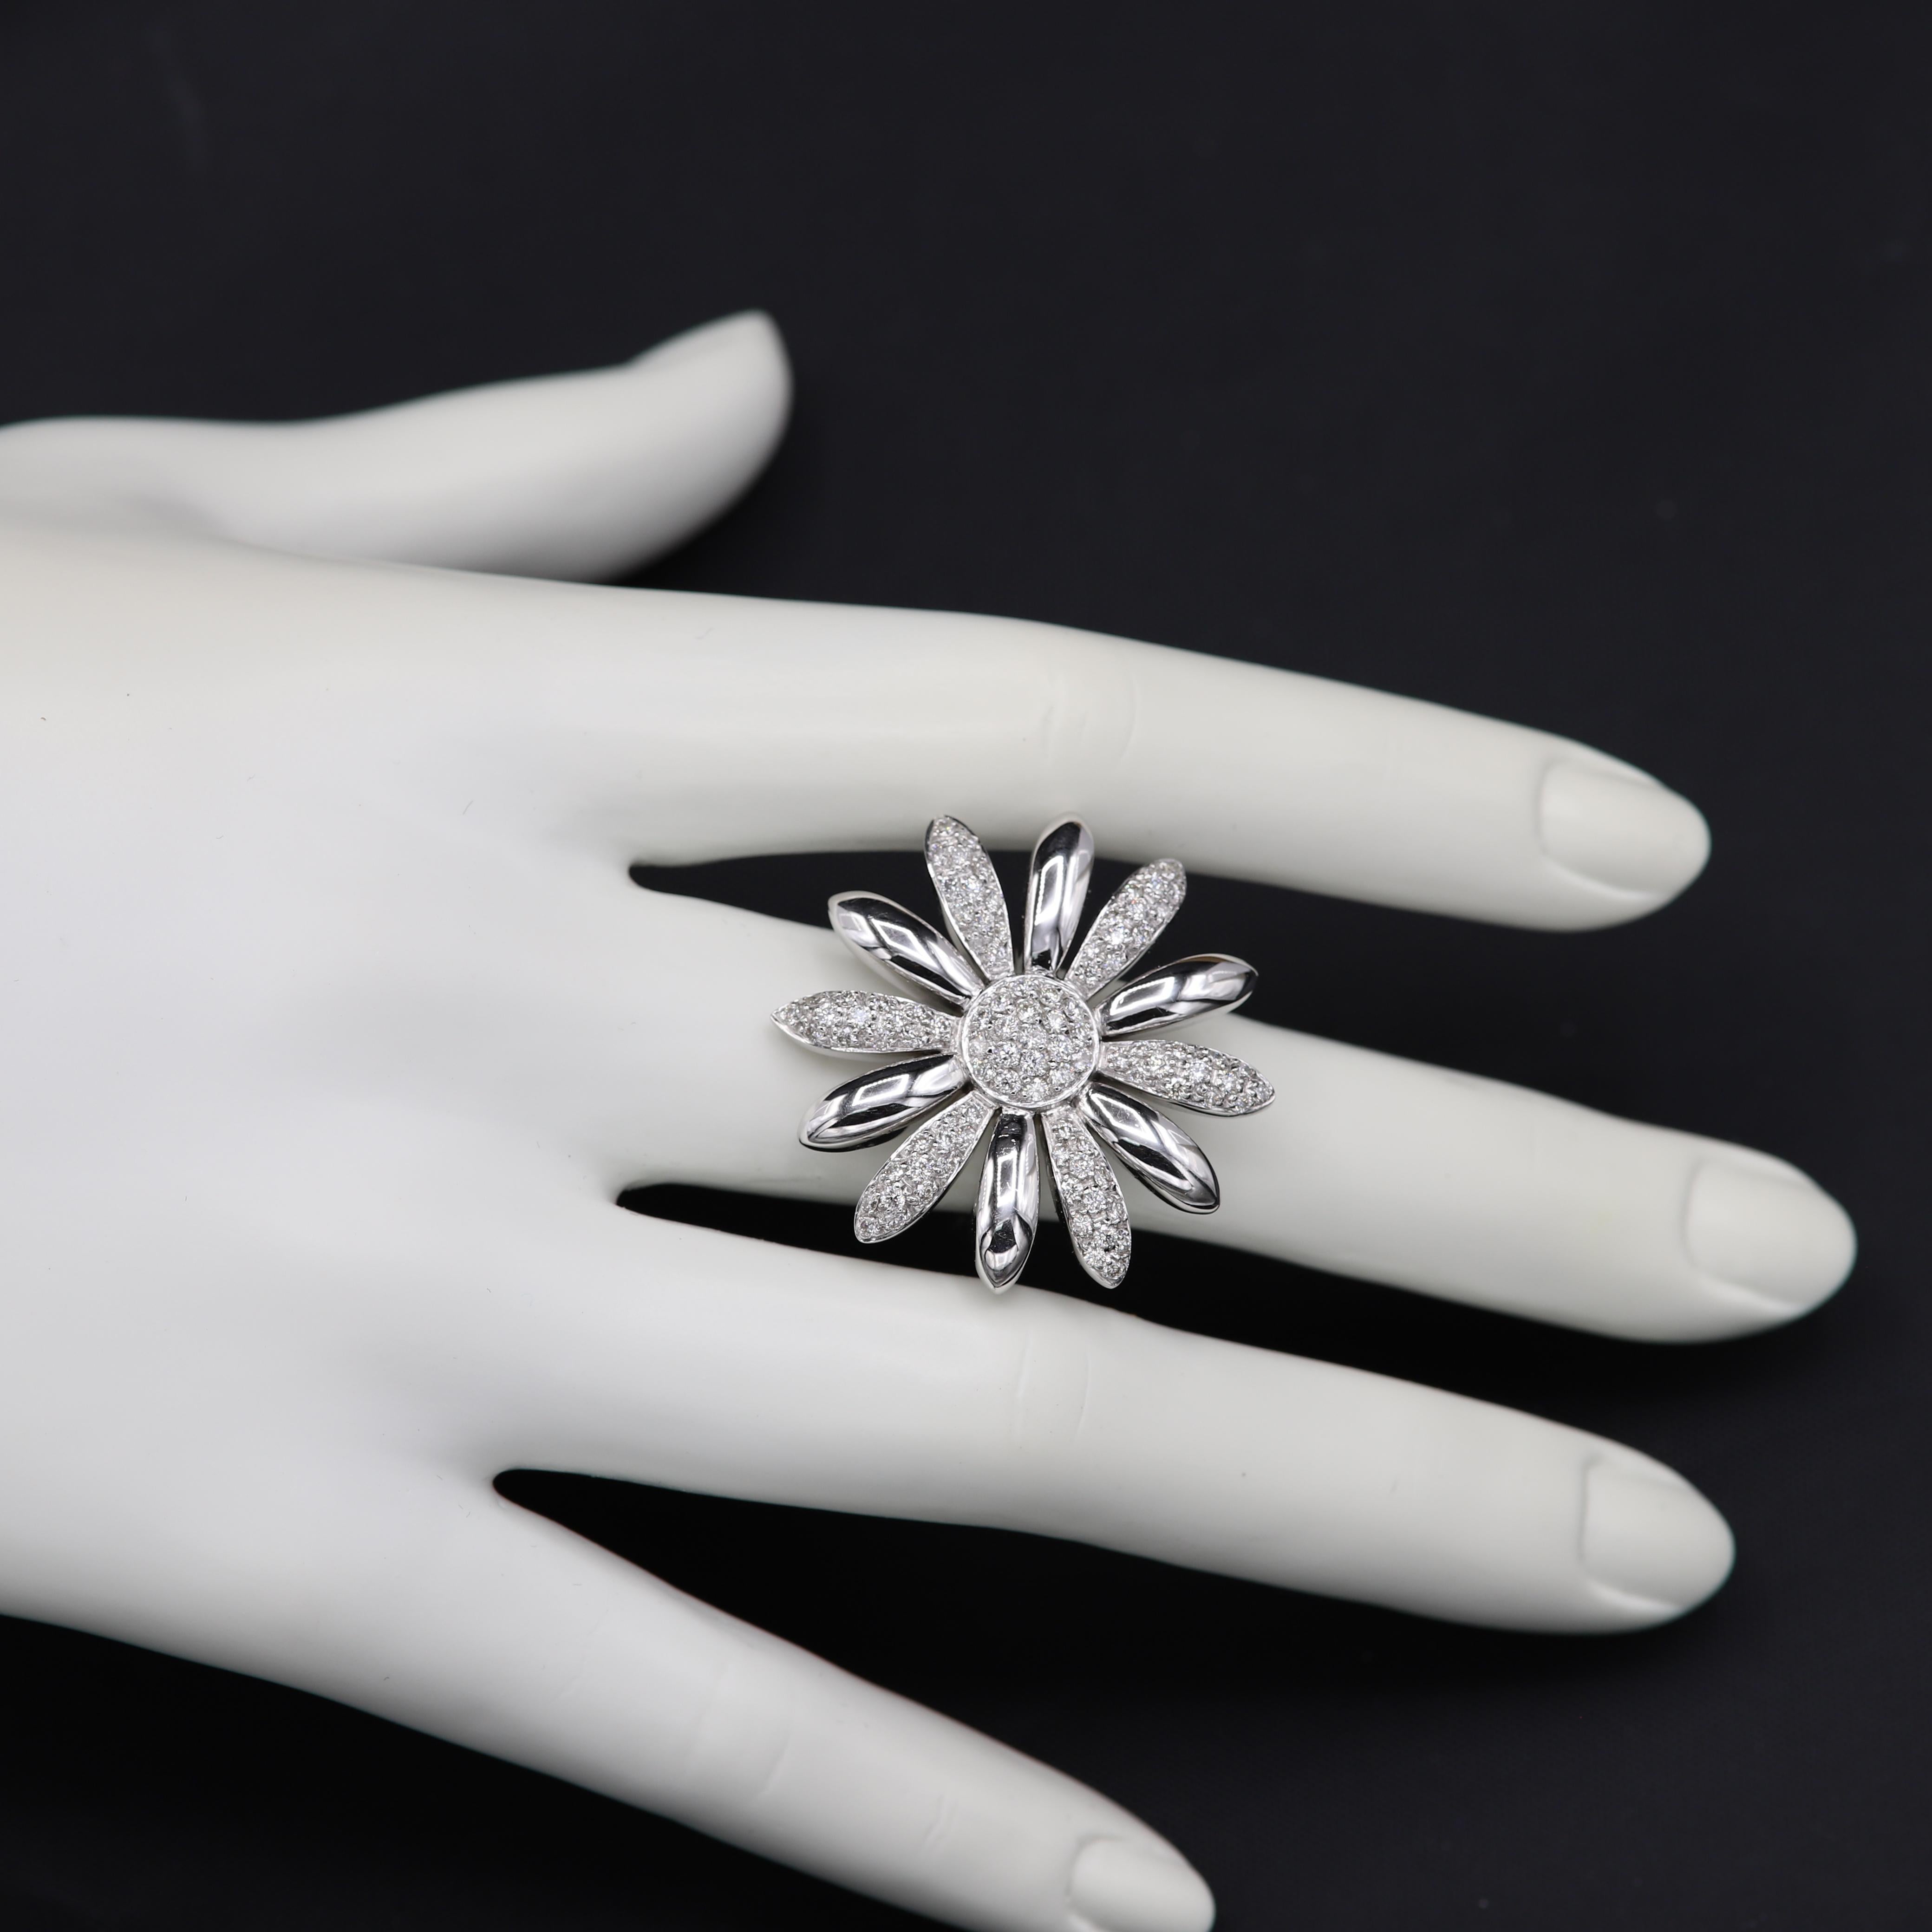 Unique Large Flower Ring
18k White Gold 19.25 grams
Total Diamonds 1.37 carat G-VS
Finger Size 6.75
overall flower size 1.25' inch (35mm) 